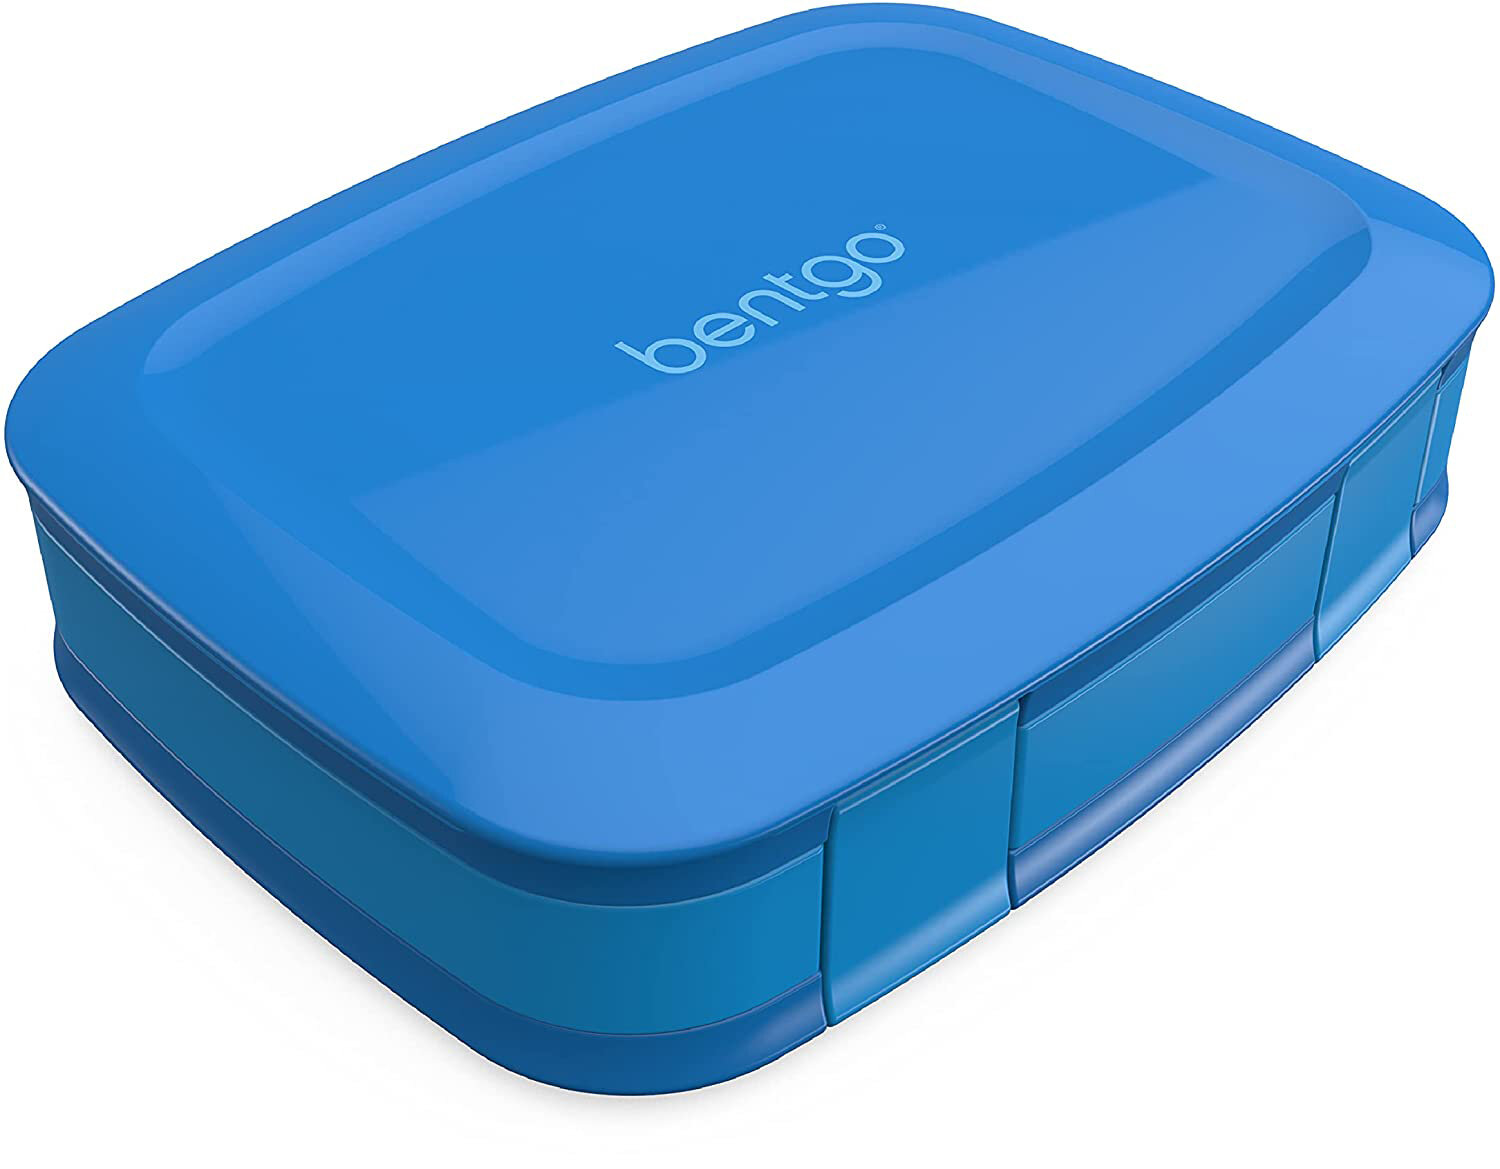 Bentgo Fresh – Leak-Proof, Versatile 4-Compartment Bento-Style Lunch Box - Amazon.jpg